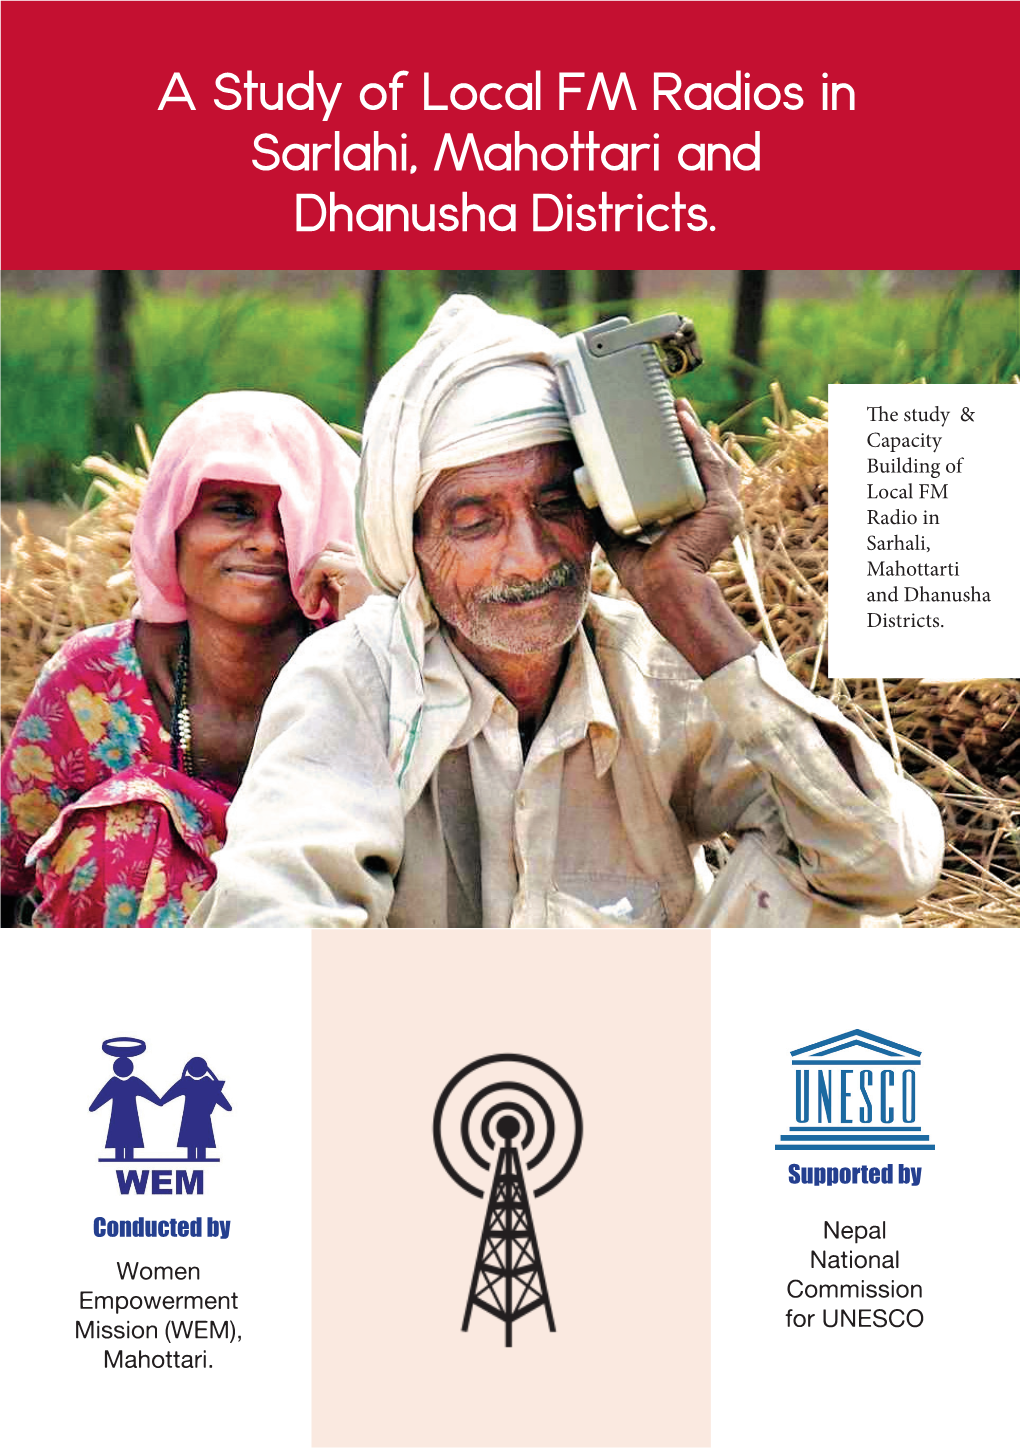 A Study of Local FM Radios in Sarlahi, Mahottari and Dhanusha Districts